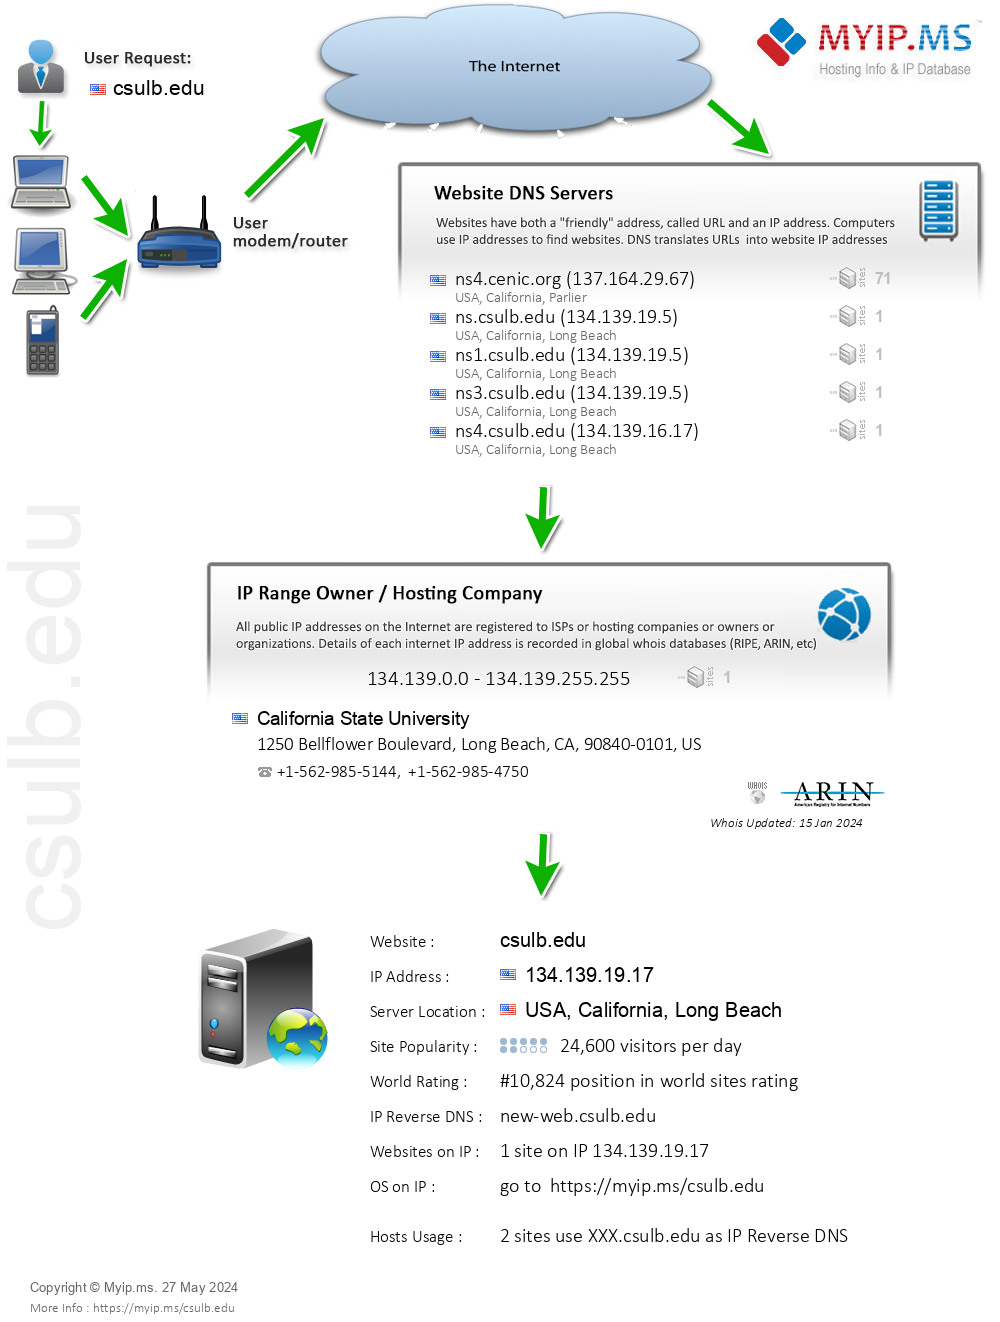 Csulb.edu - Website Hosting Visual IP Diagram